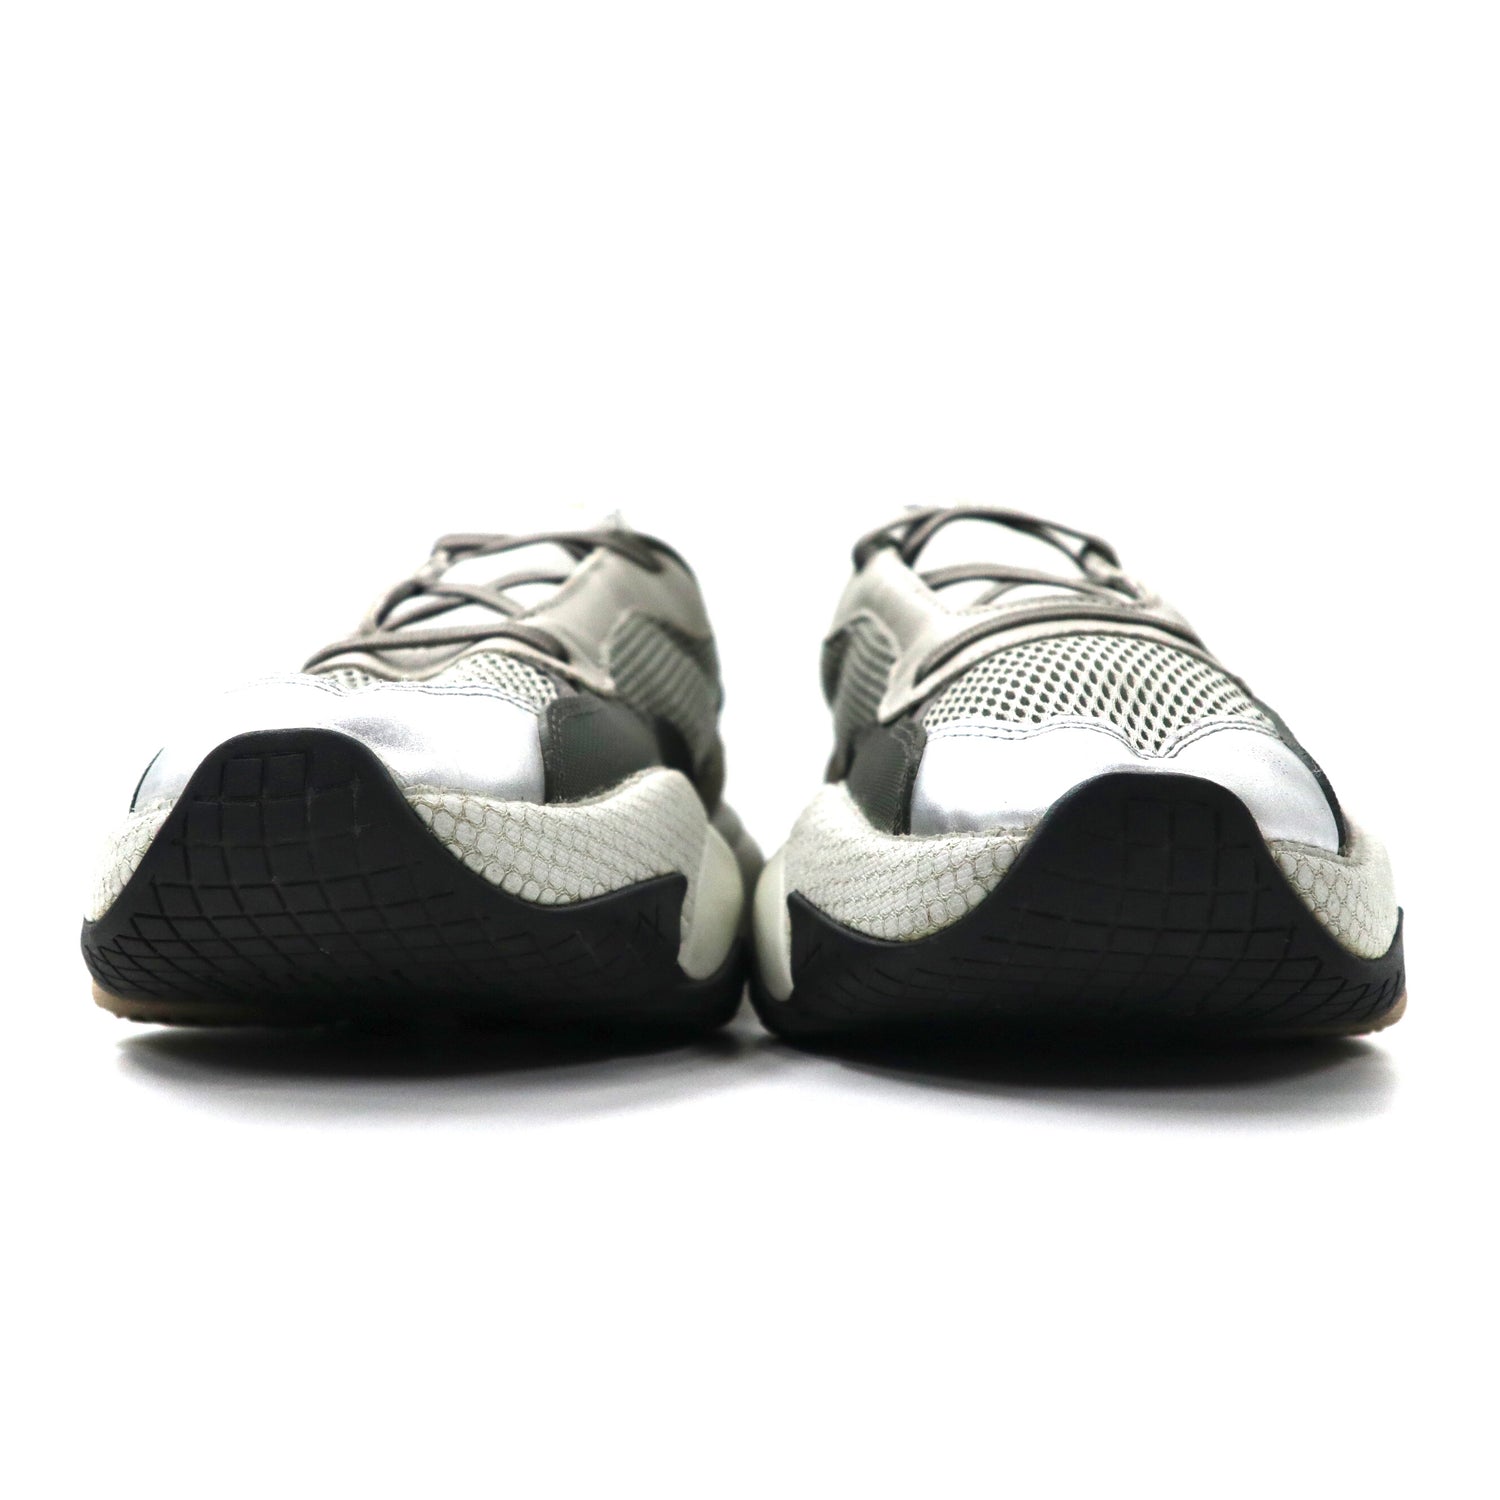 PUMA × HAN KJOBENHAVN Sneakers Gray Alteration PN-2 370771-01 2019 model –